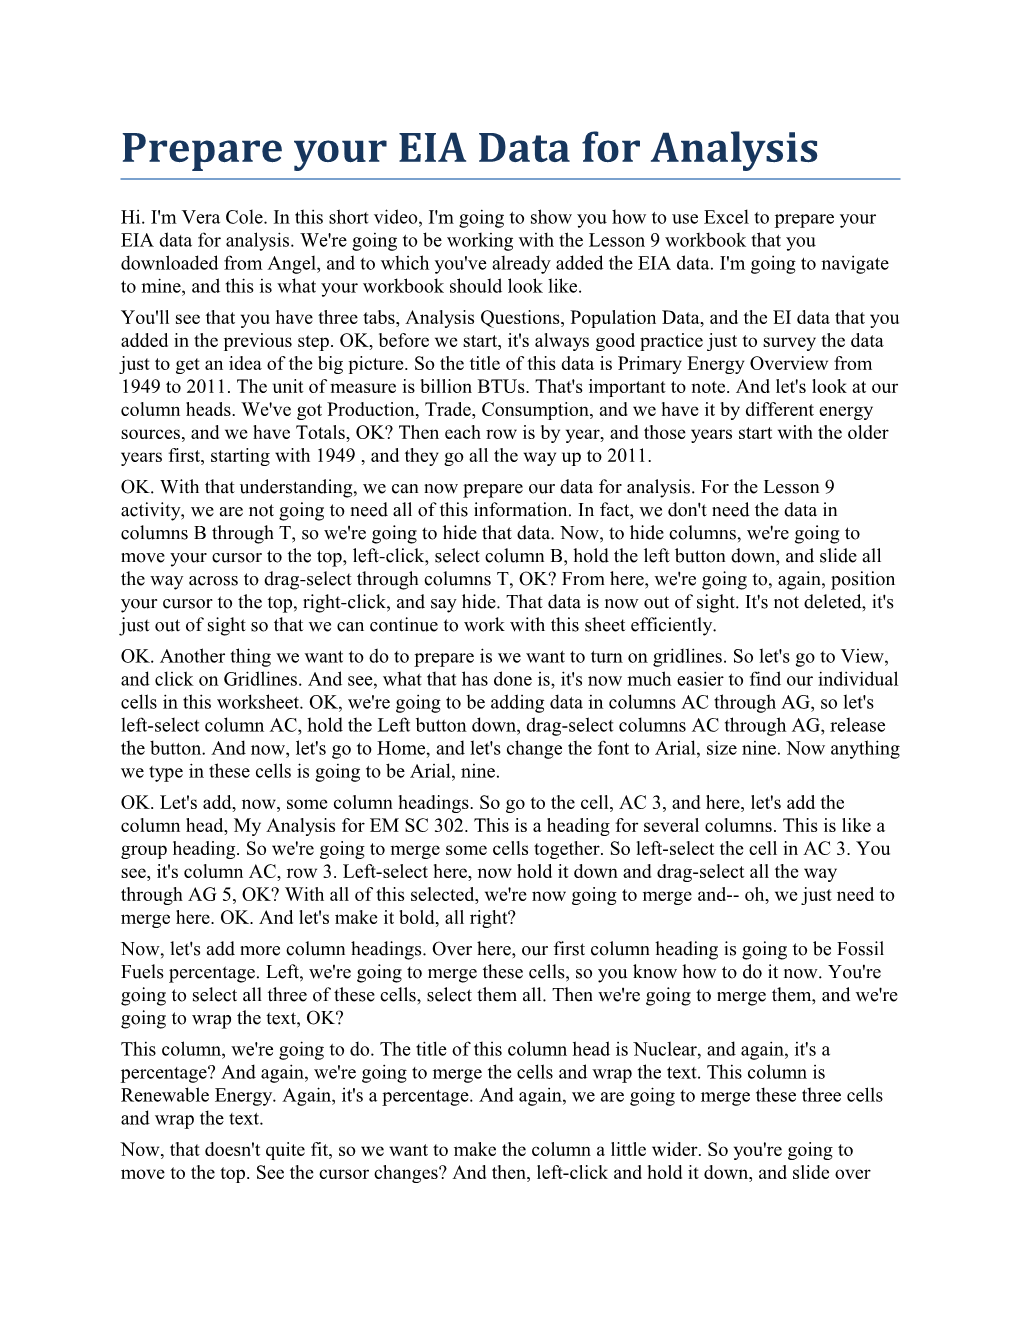 Prepare Your EIA Data for Analysis